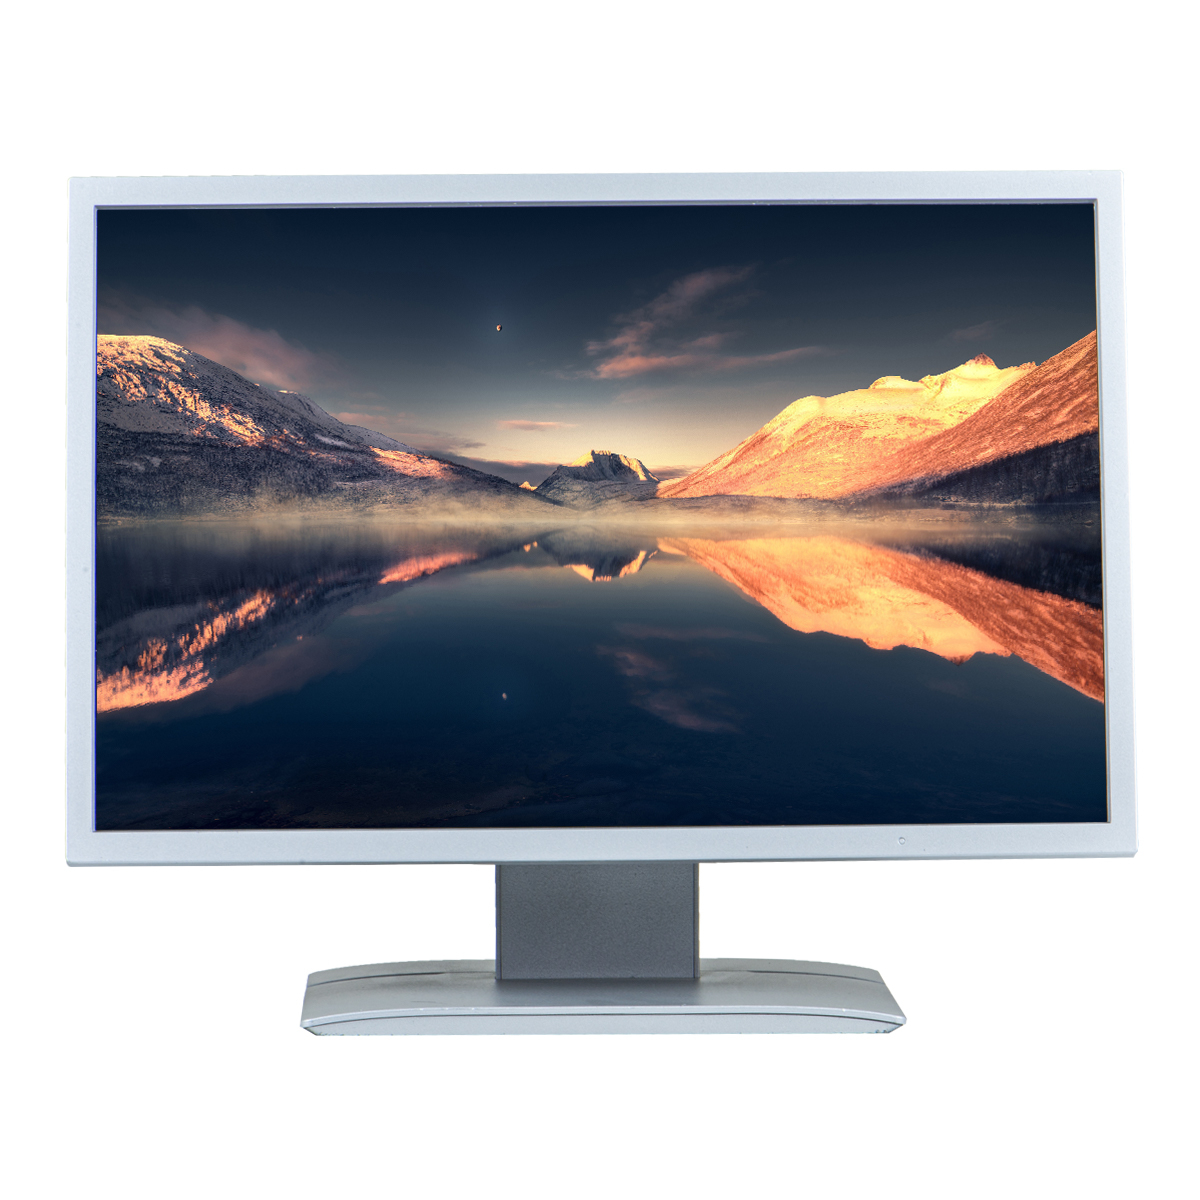 NEC MultiSync E223W  22 inch LED  1680 x 1050  16:10  negru-argintiu  monitor refurbished